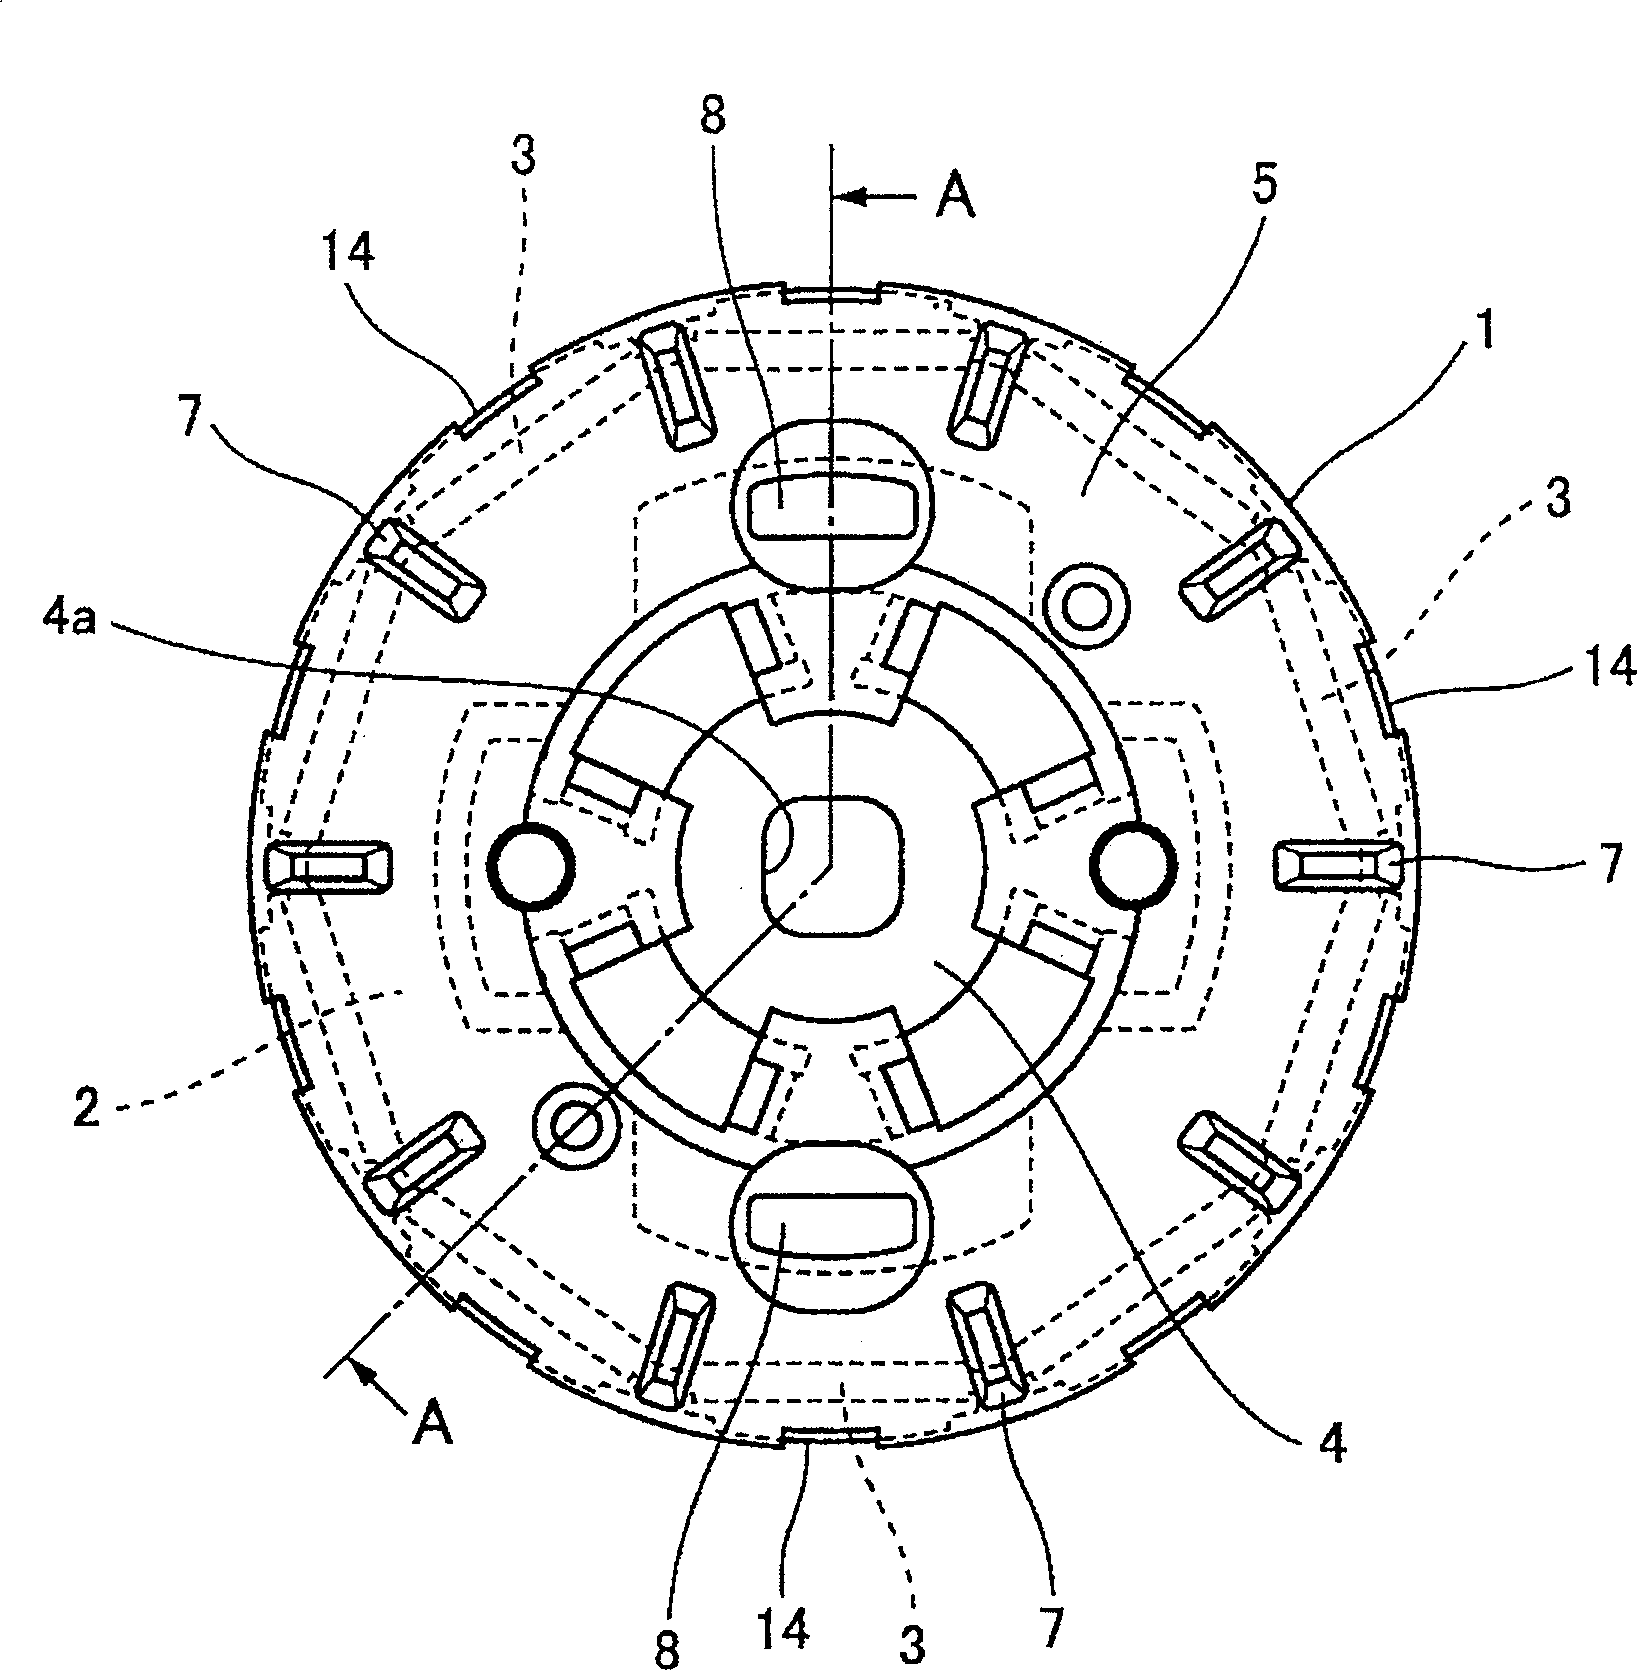 Rotor of motor and motor